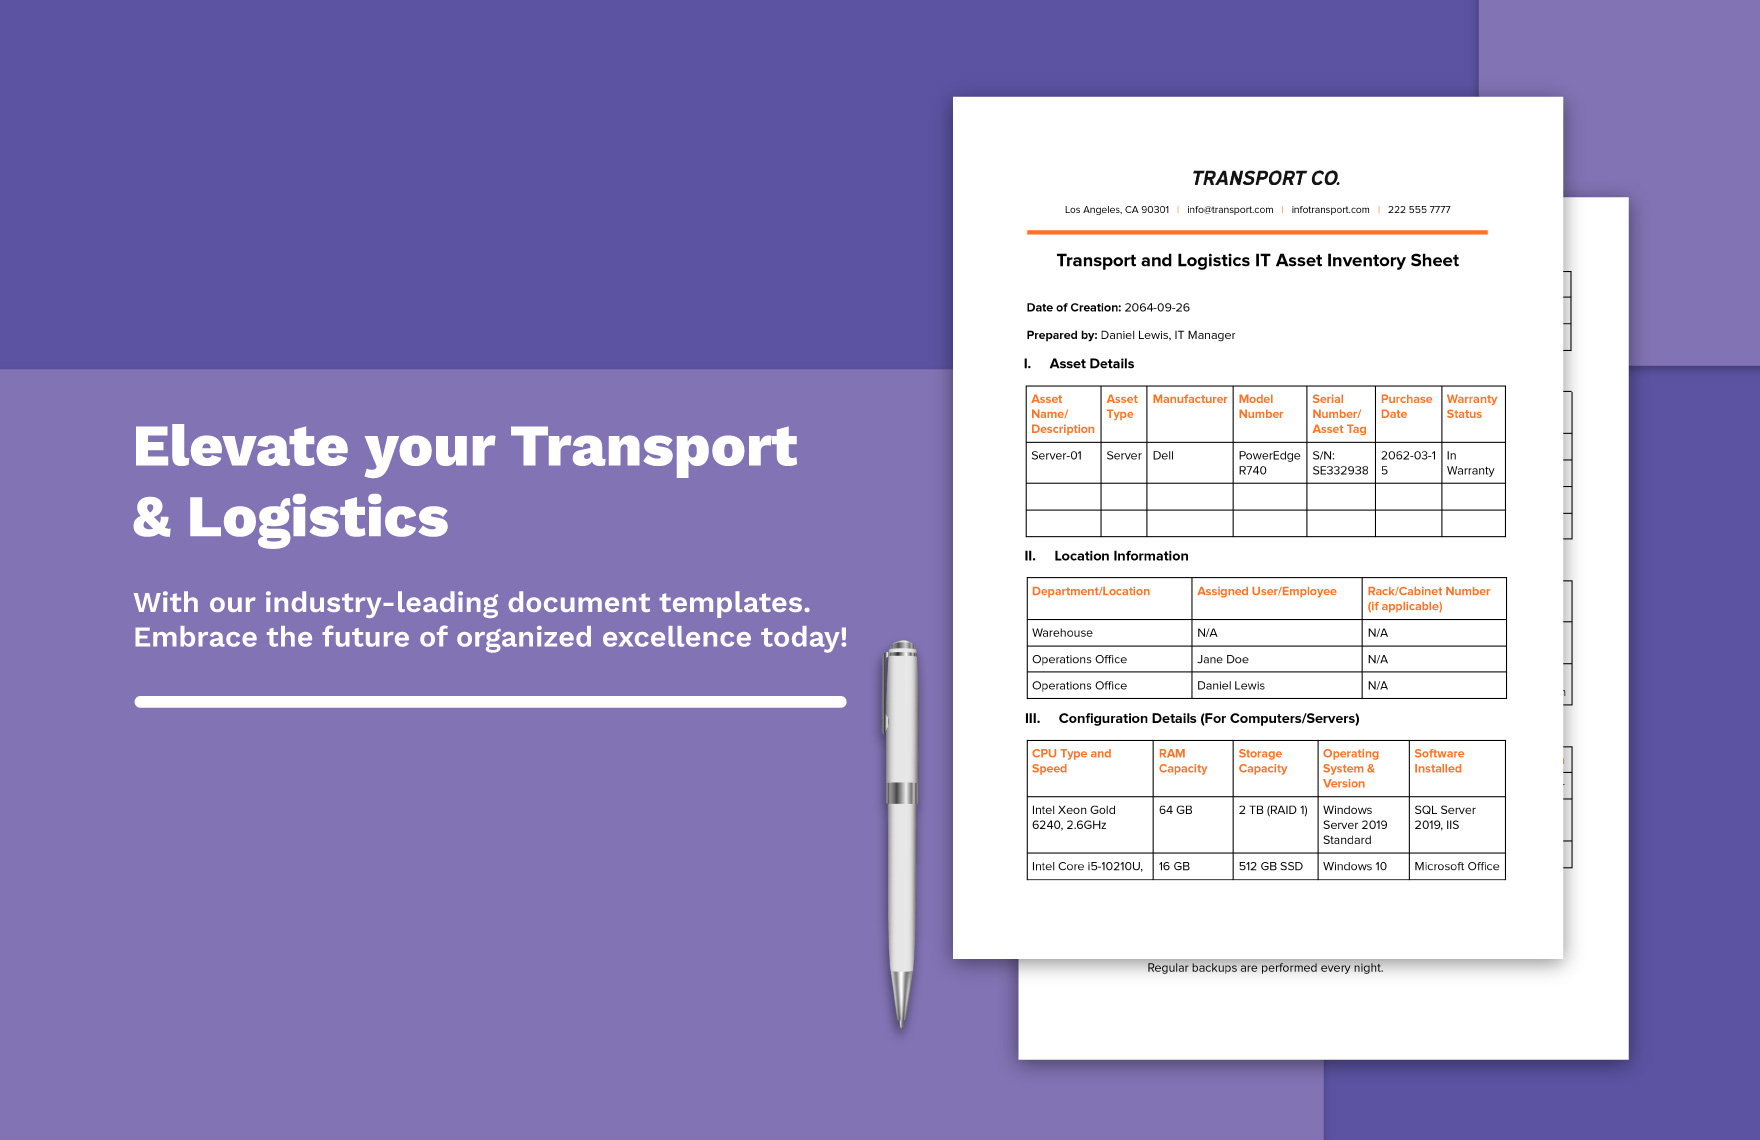 Transport and Logistics IT Asset Inventory Sheet Template